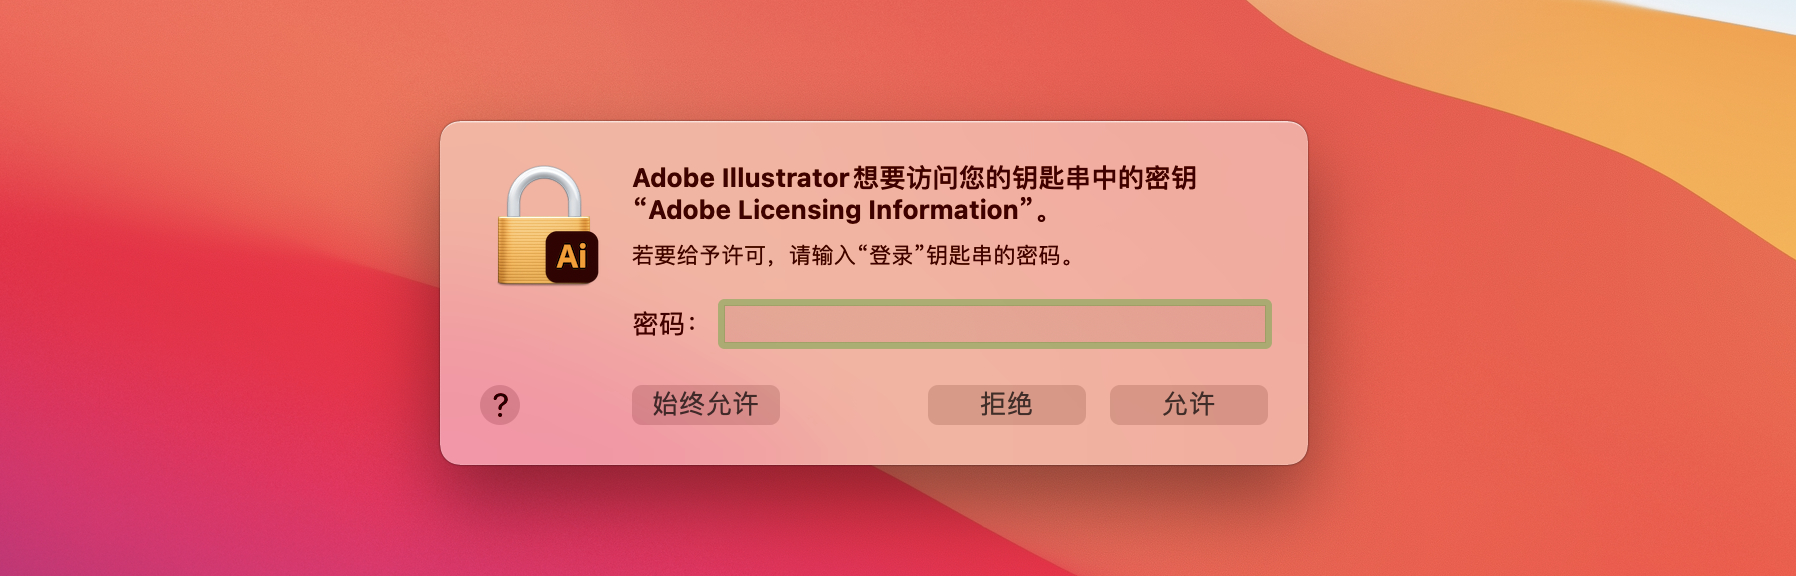 mac版photoshop cs6破解_mac 清理工具破解版_mac版office2016破解